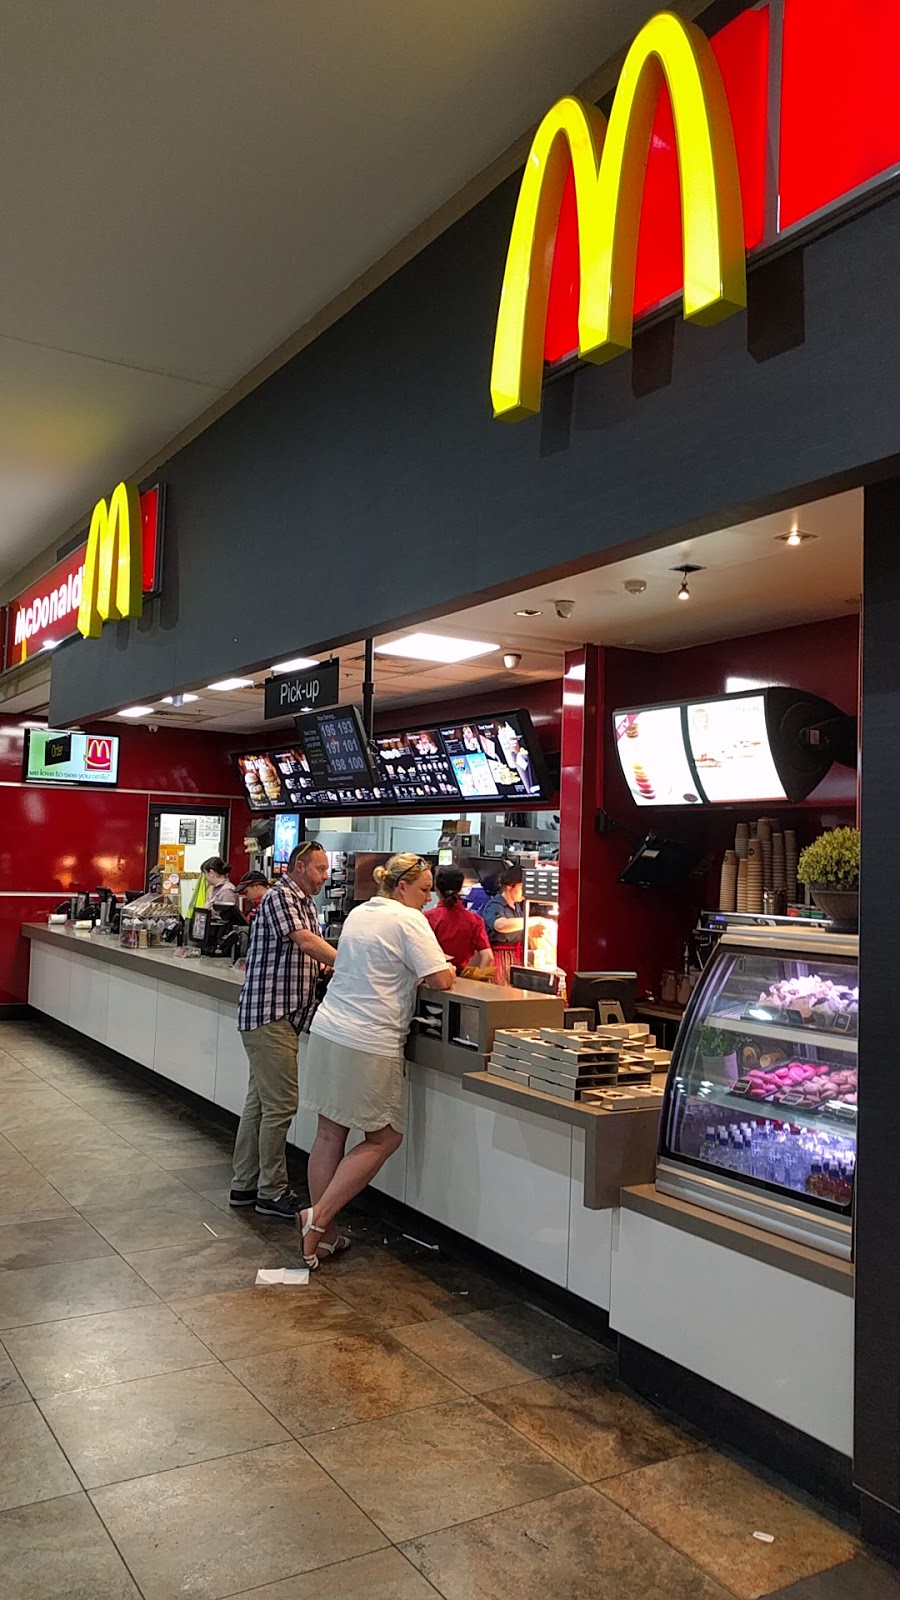 McDonalds Melb Airport II | Cnr Melbourne Drive &, S Centre Rd, Tullamarine VIC 3043, Australia | Phone: (03) 9310 4277